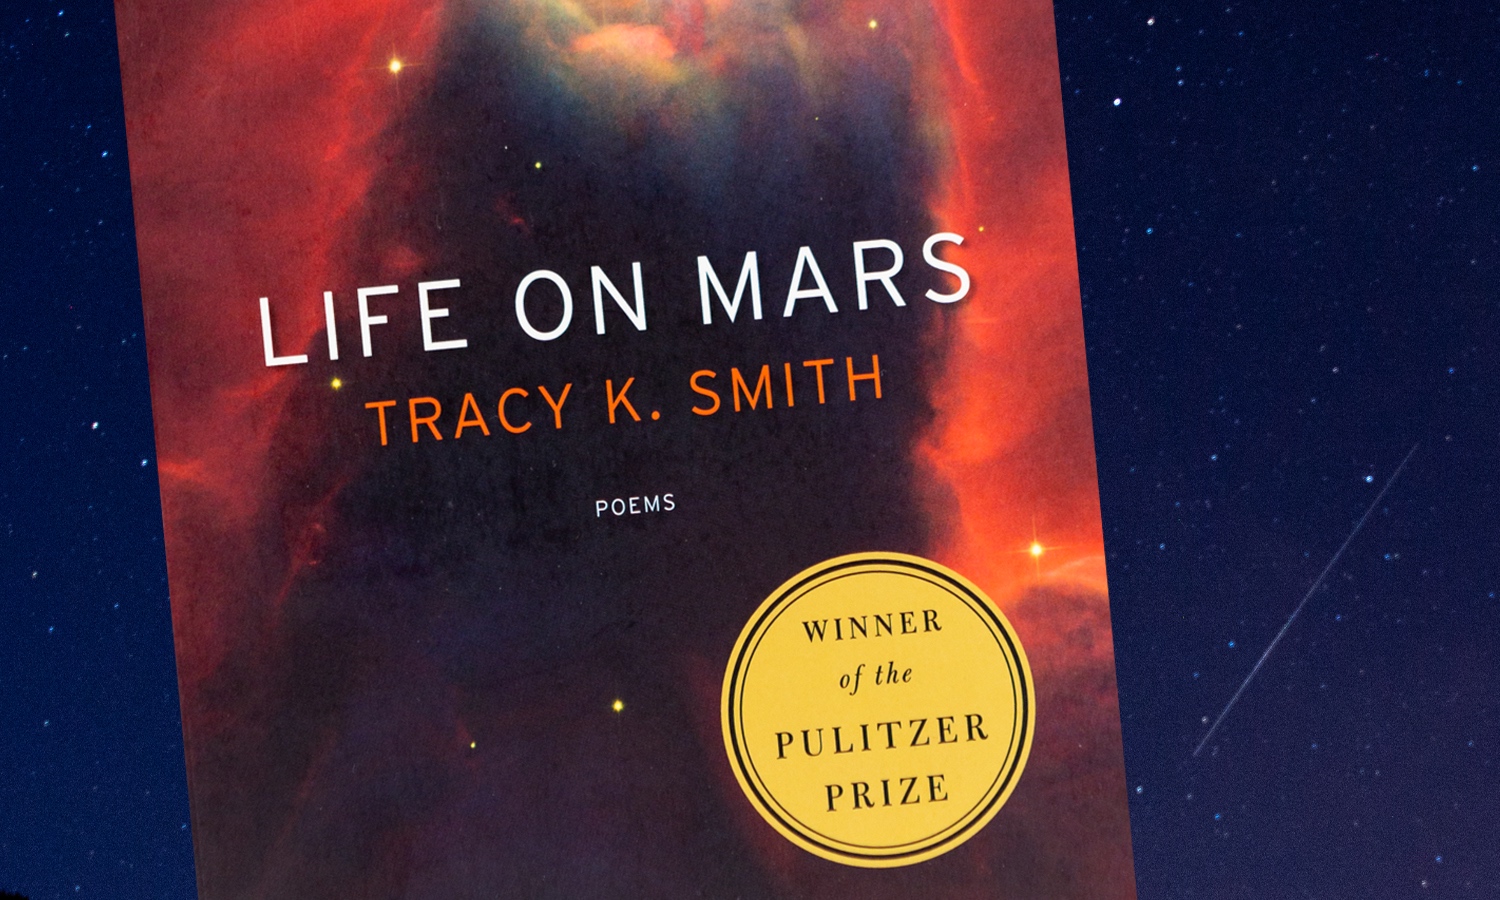 Life on Mars by Tracy K. Smith